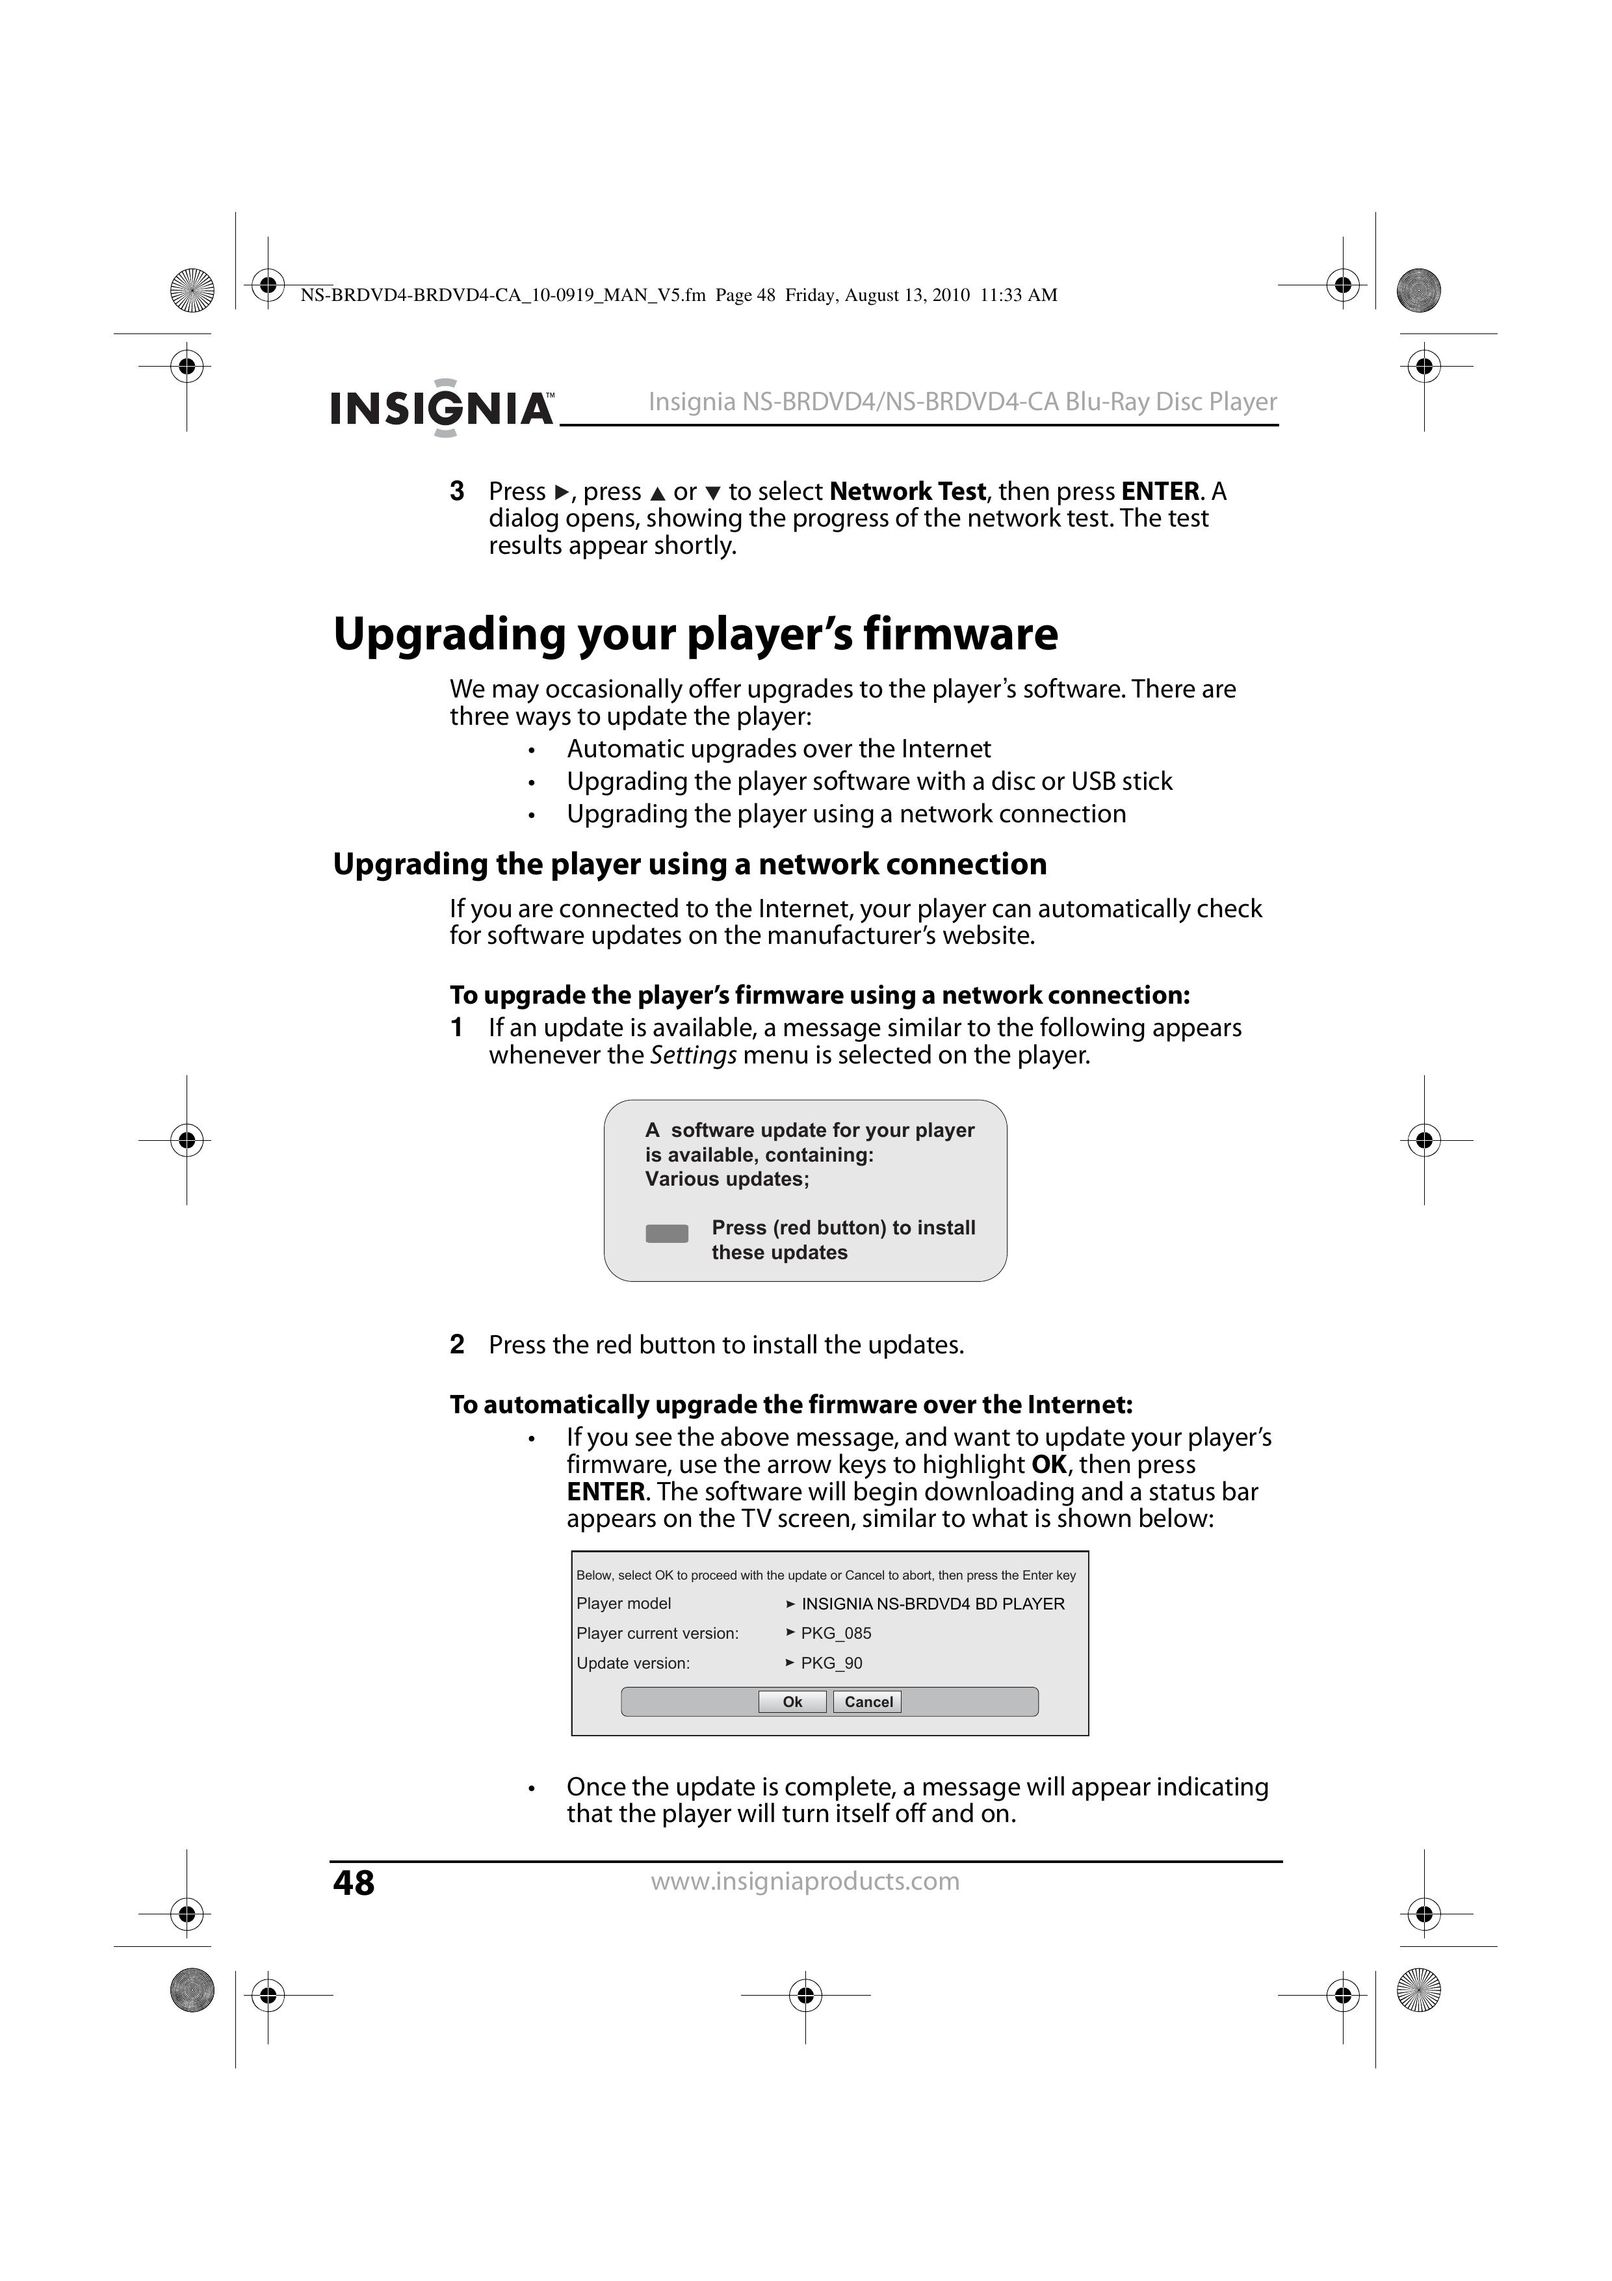 Insignia NS-BRDVD4 Blu-ray Player User Manual (Page 48)